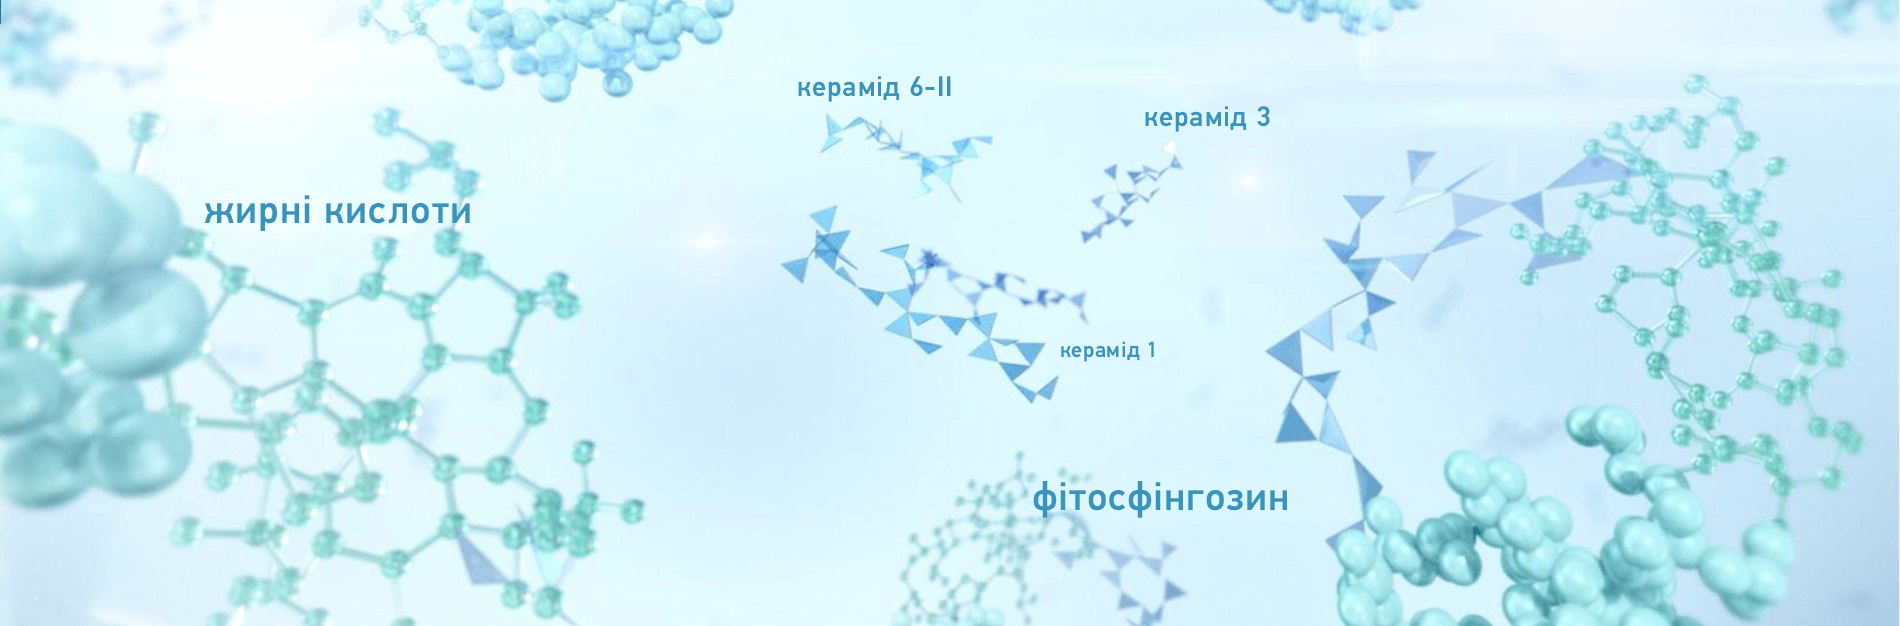 Phytoceramids vs Ceramides TOP banner_UA